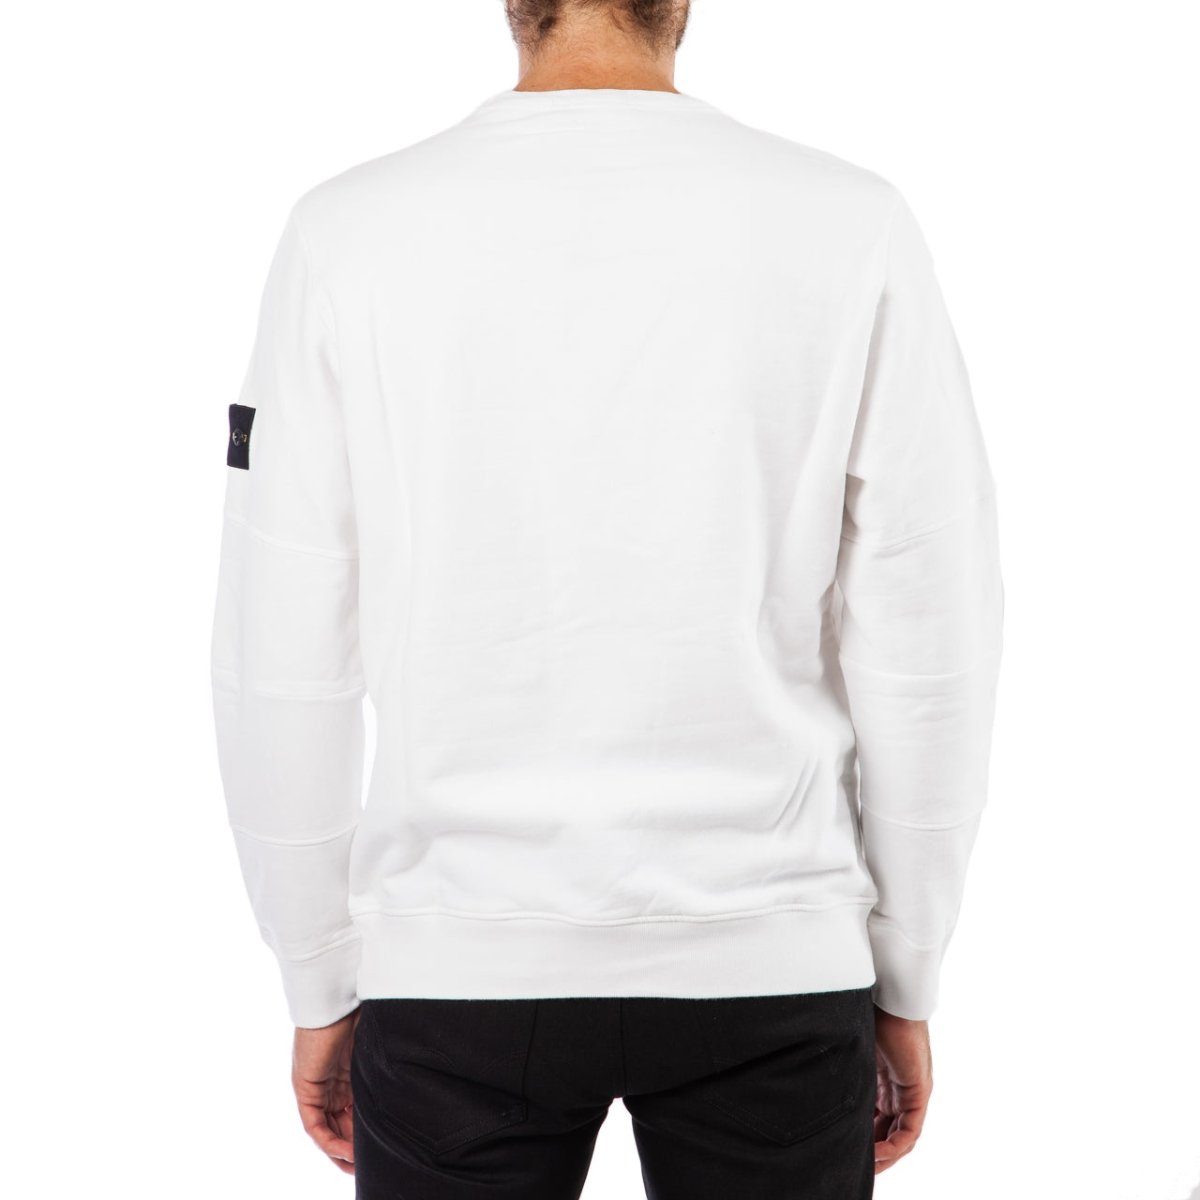 Stone Island Sweat Shirt (Weiß)  - Allike Store